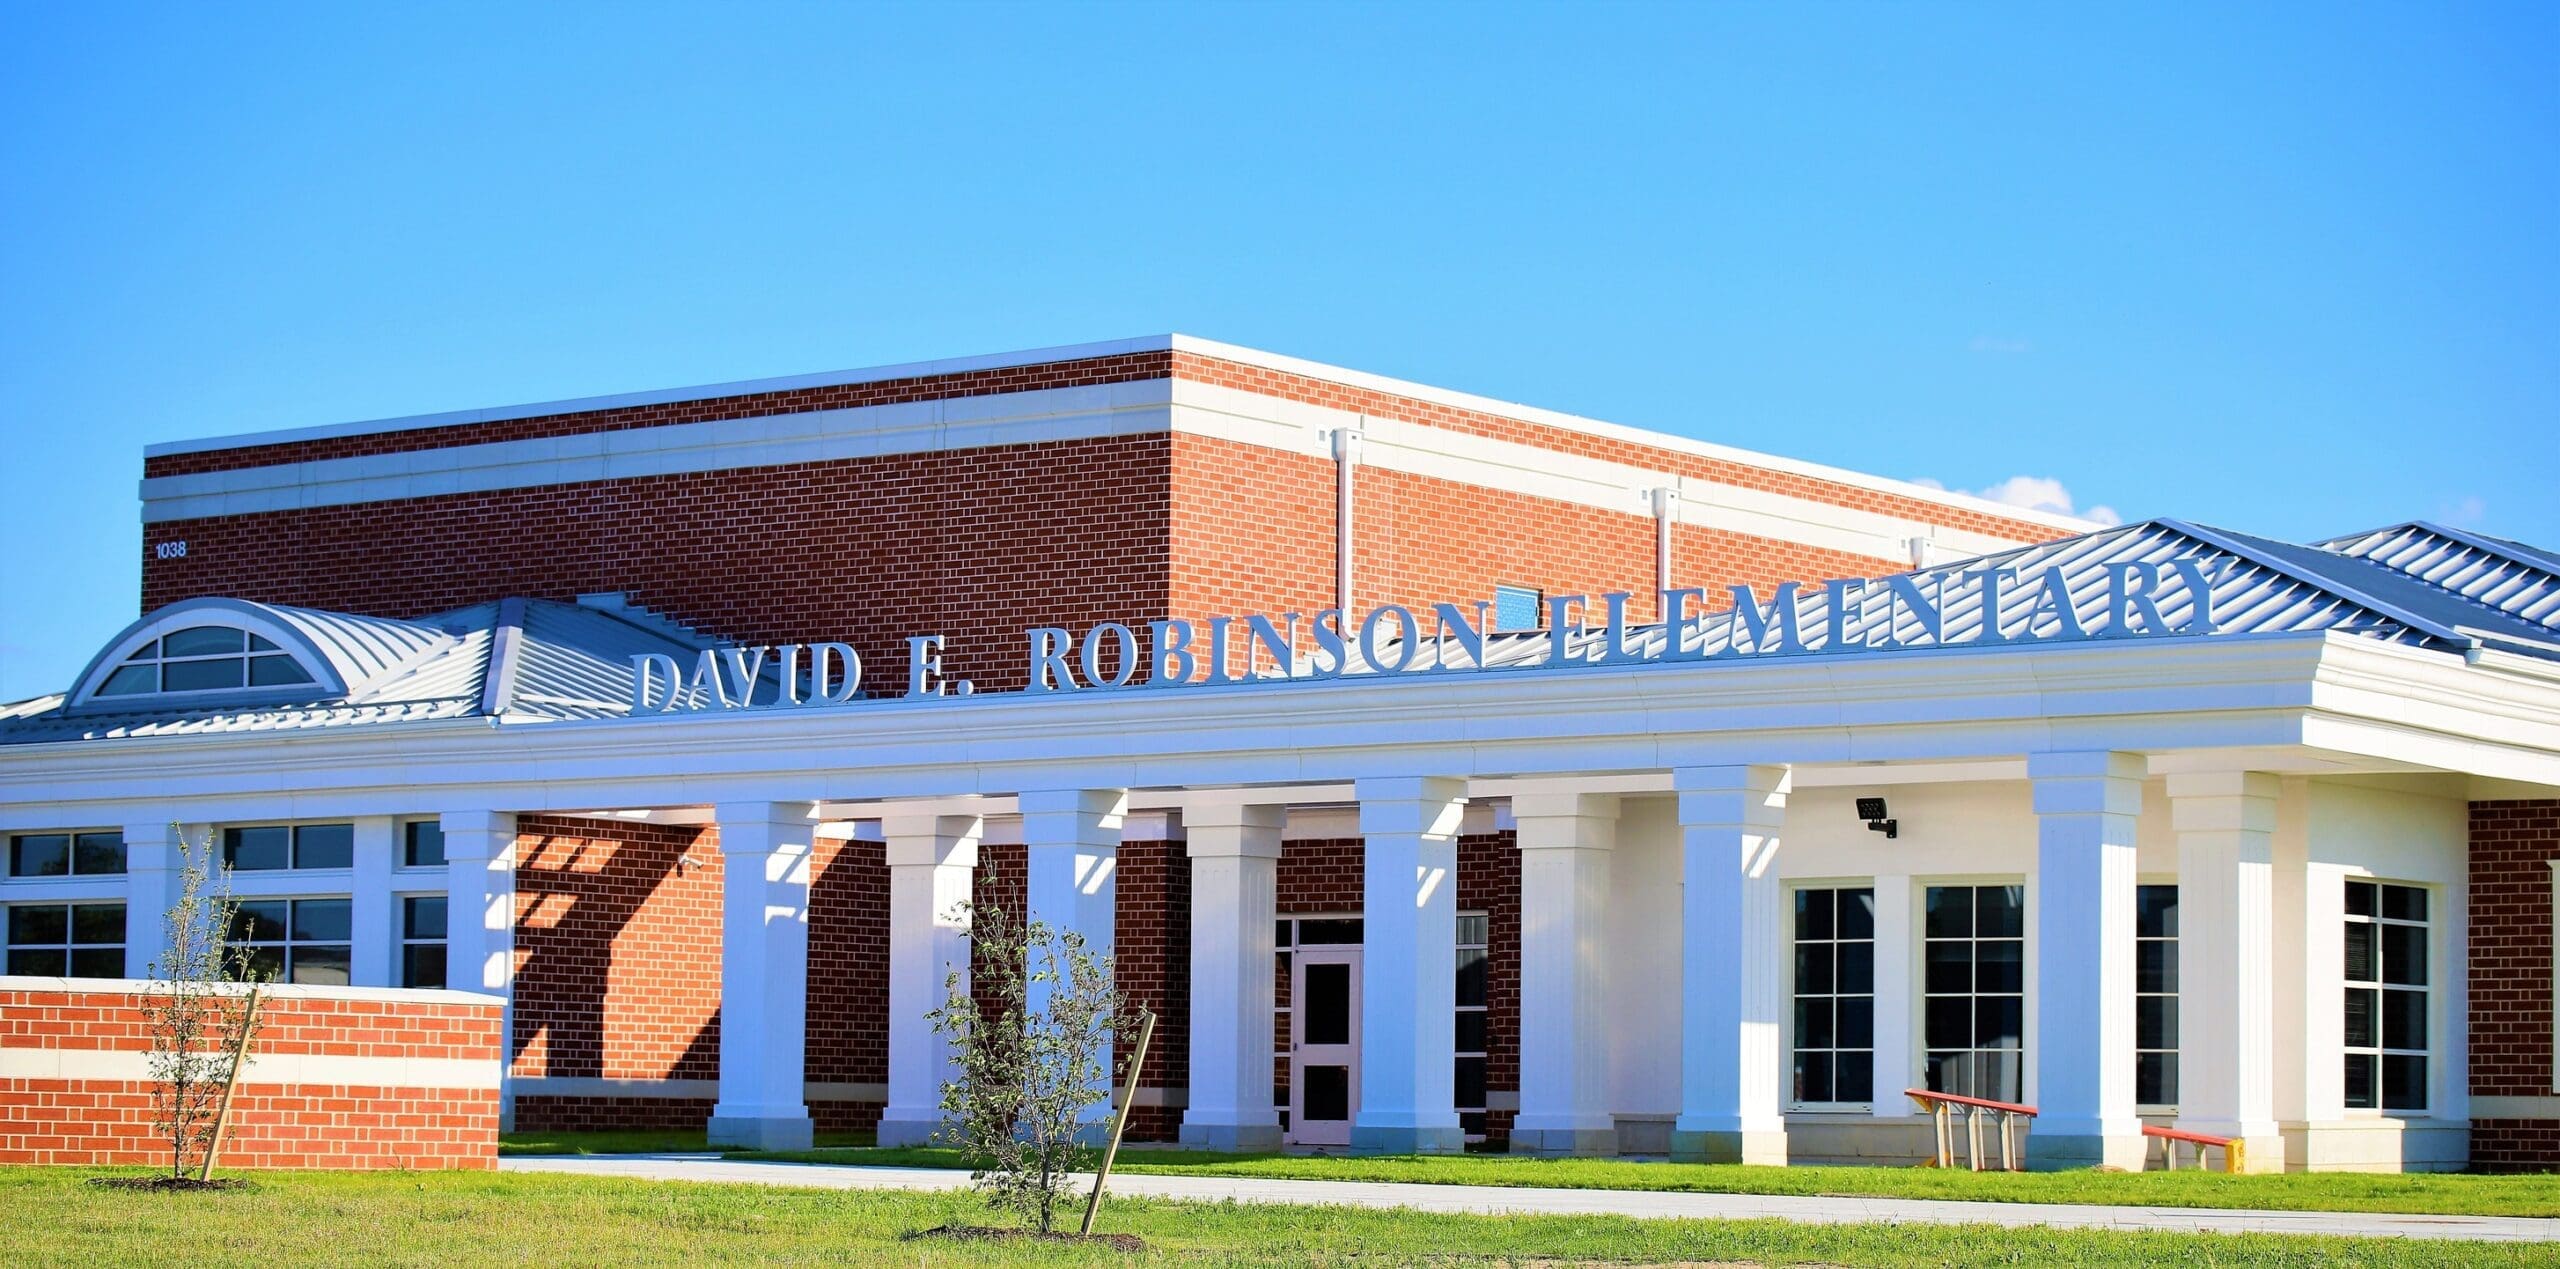 Caesar Rodney's David E. Robinson Elementary School, located in Magnolia. (Caesar Rodney Facebook)